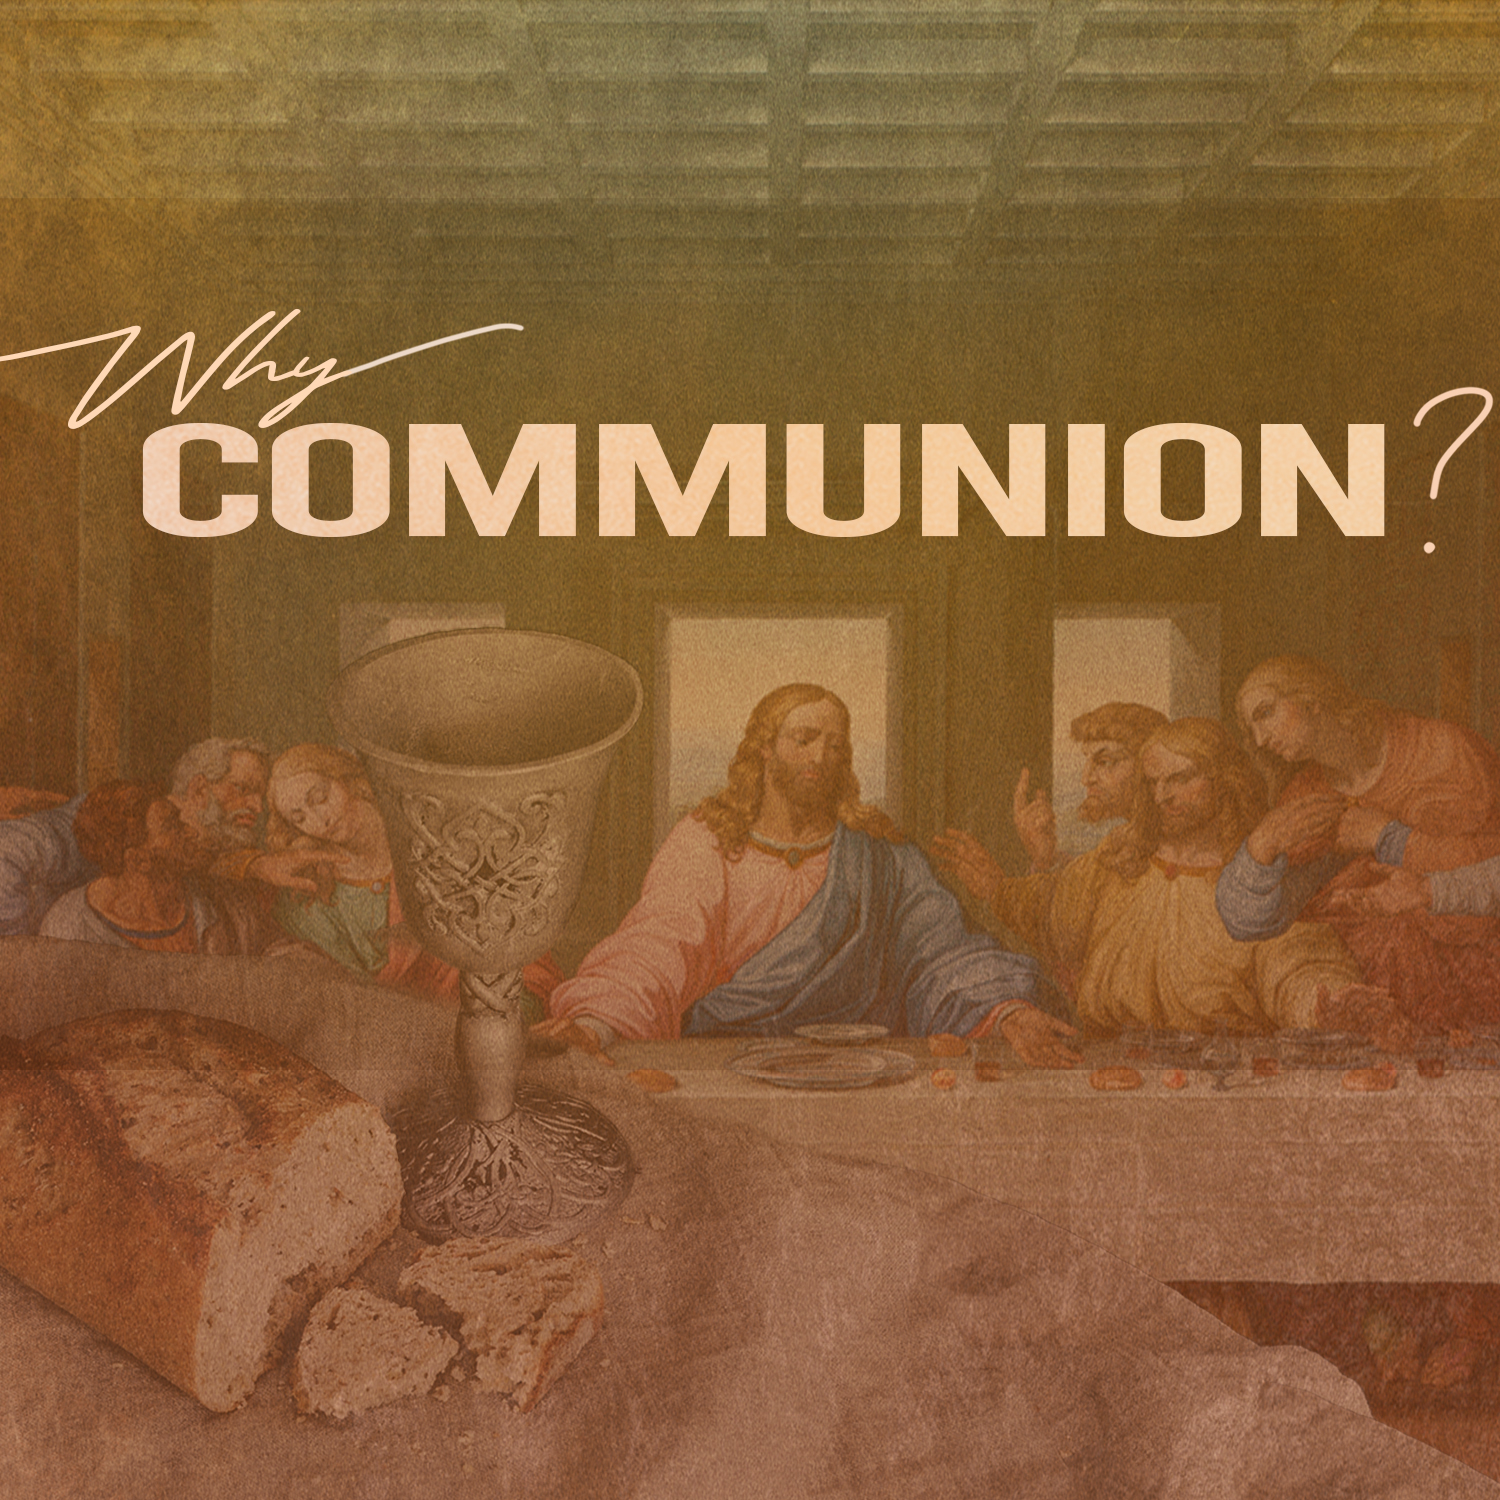 Why Communion?